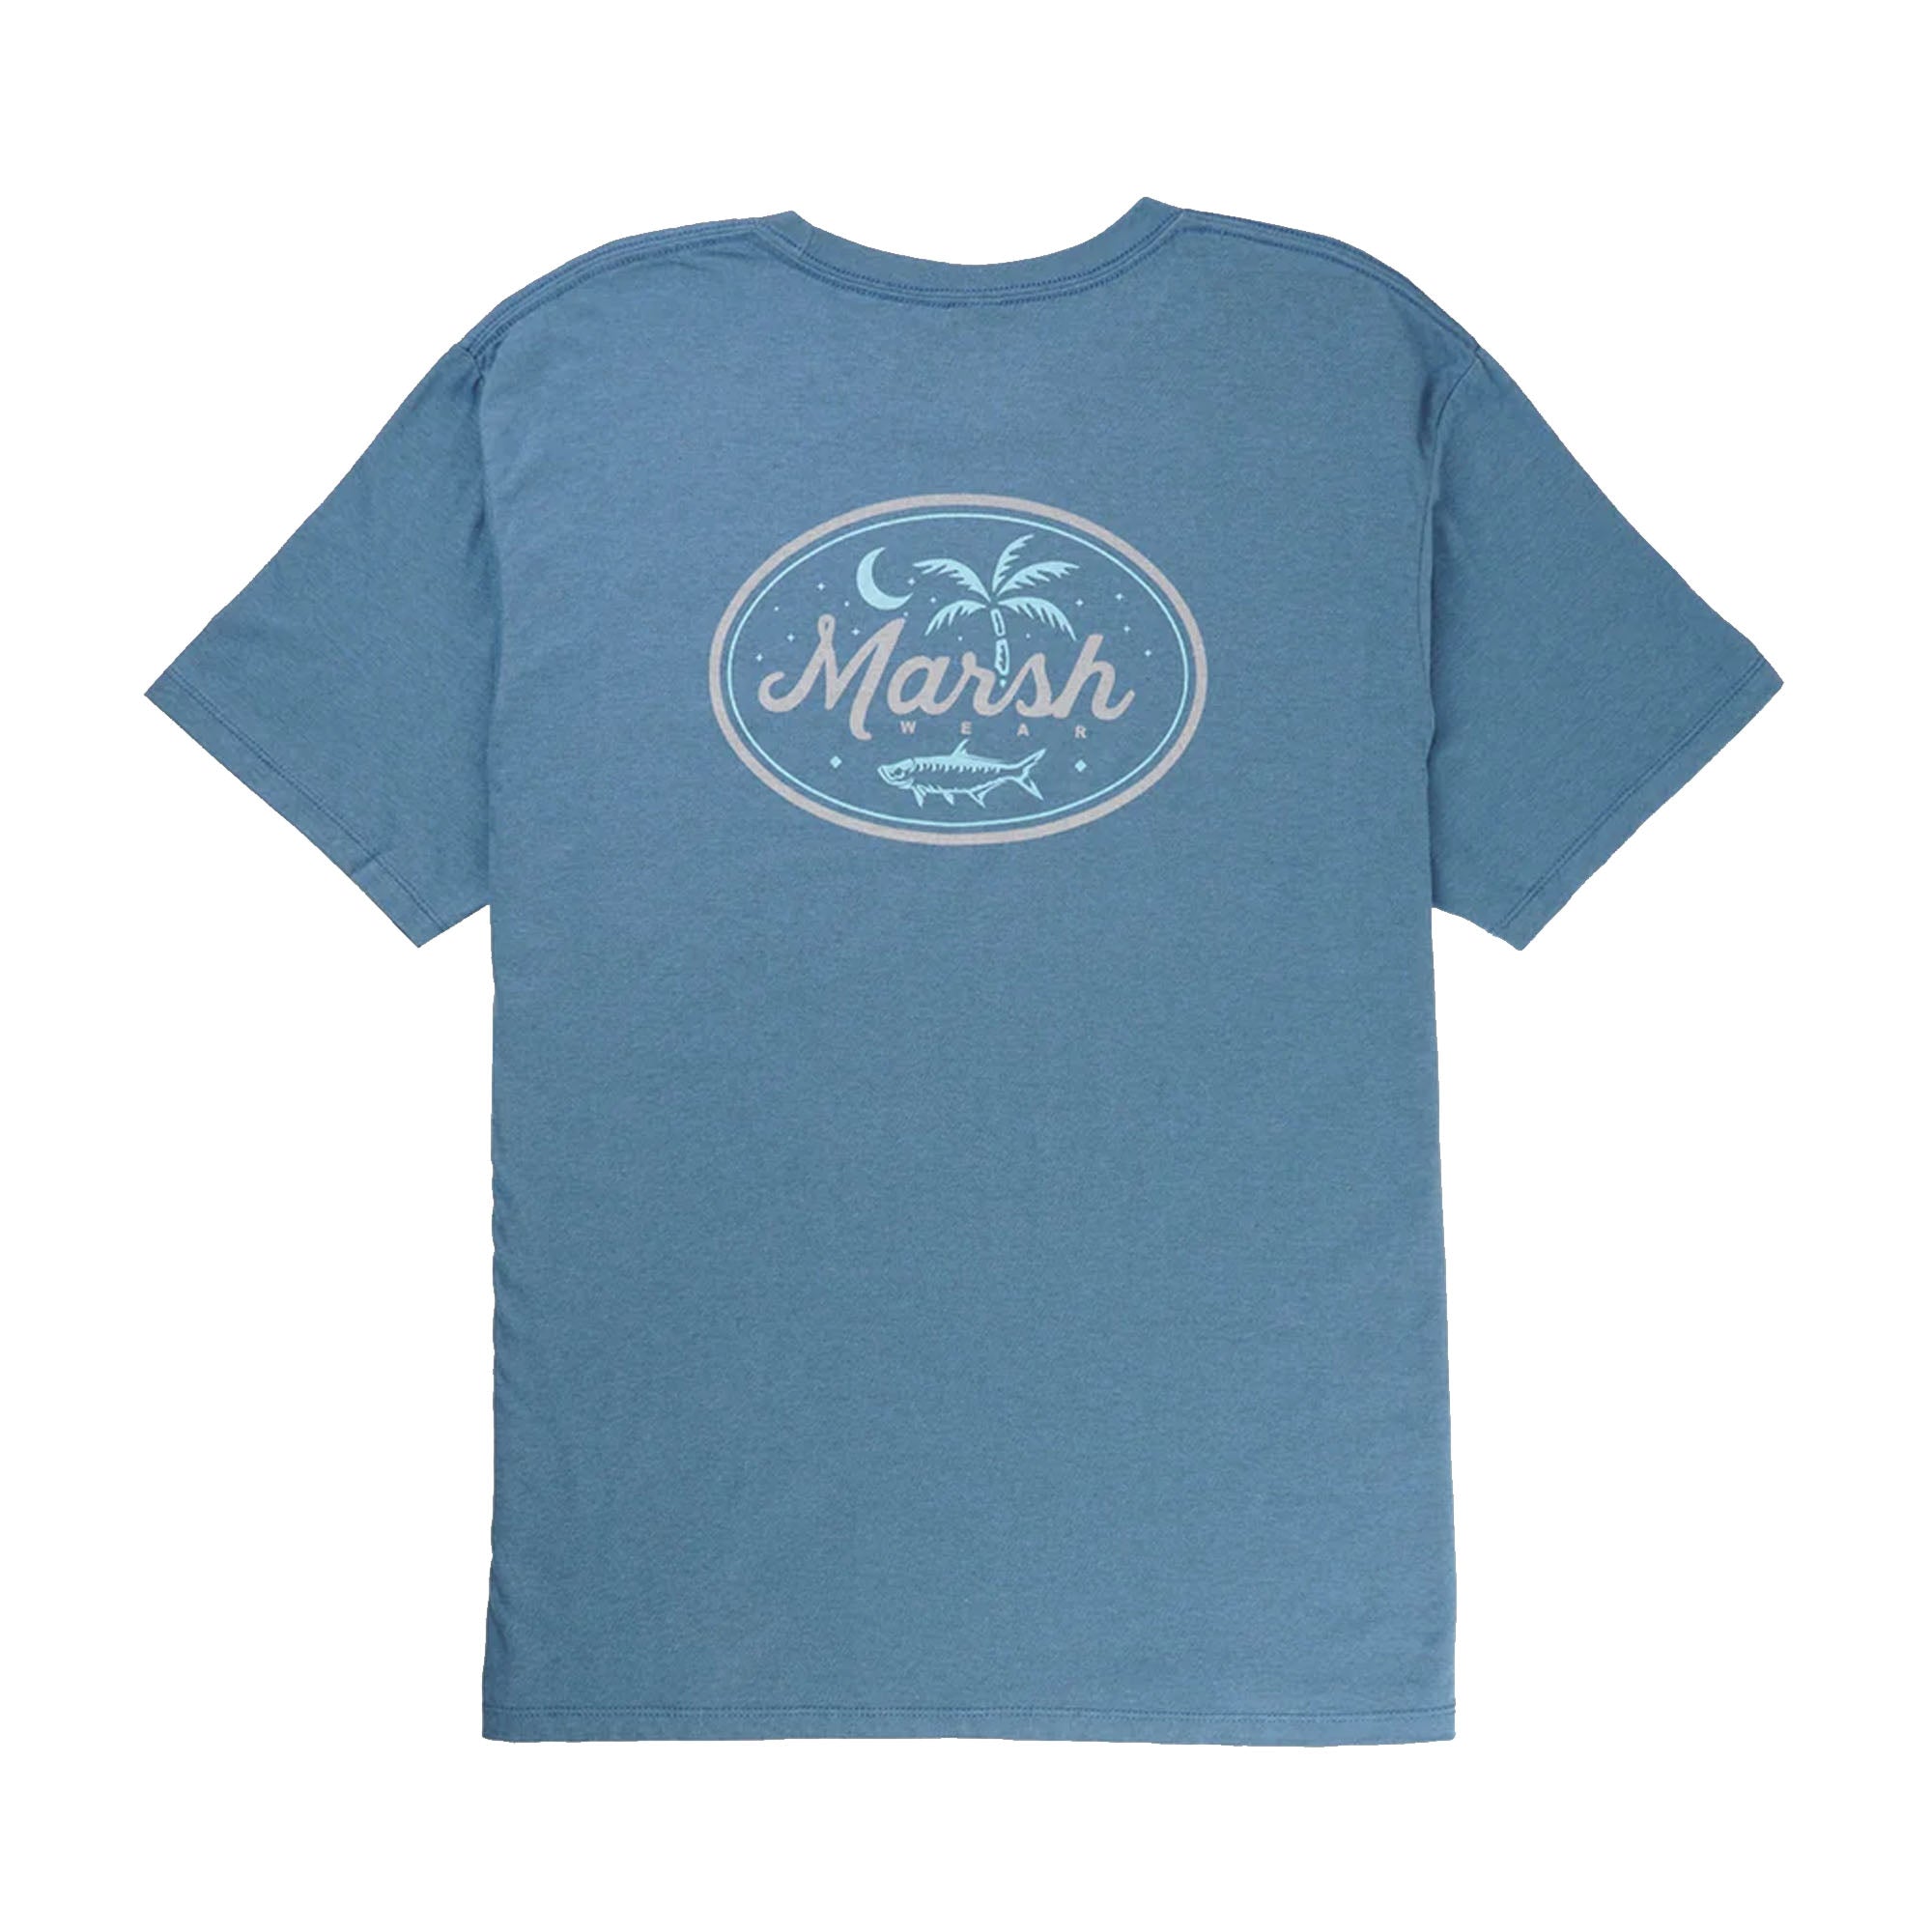 Marsh Wear Crescent Men's S/S T-Shirt